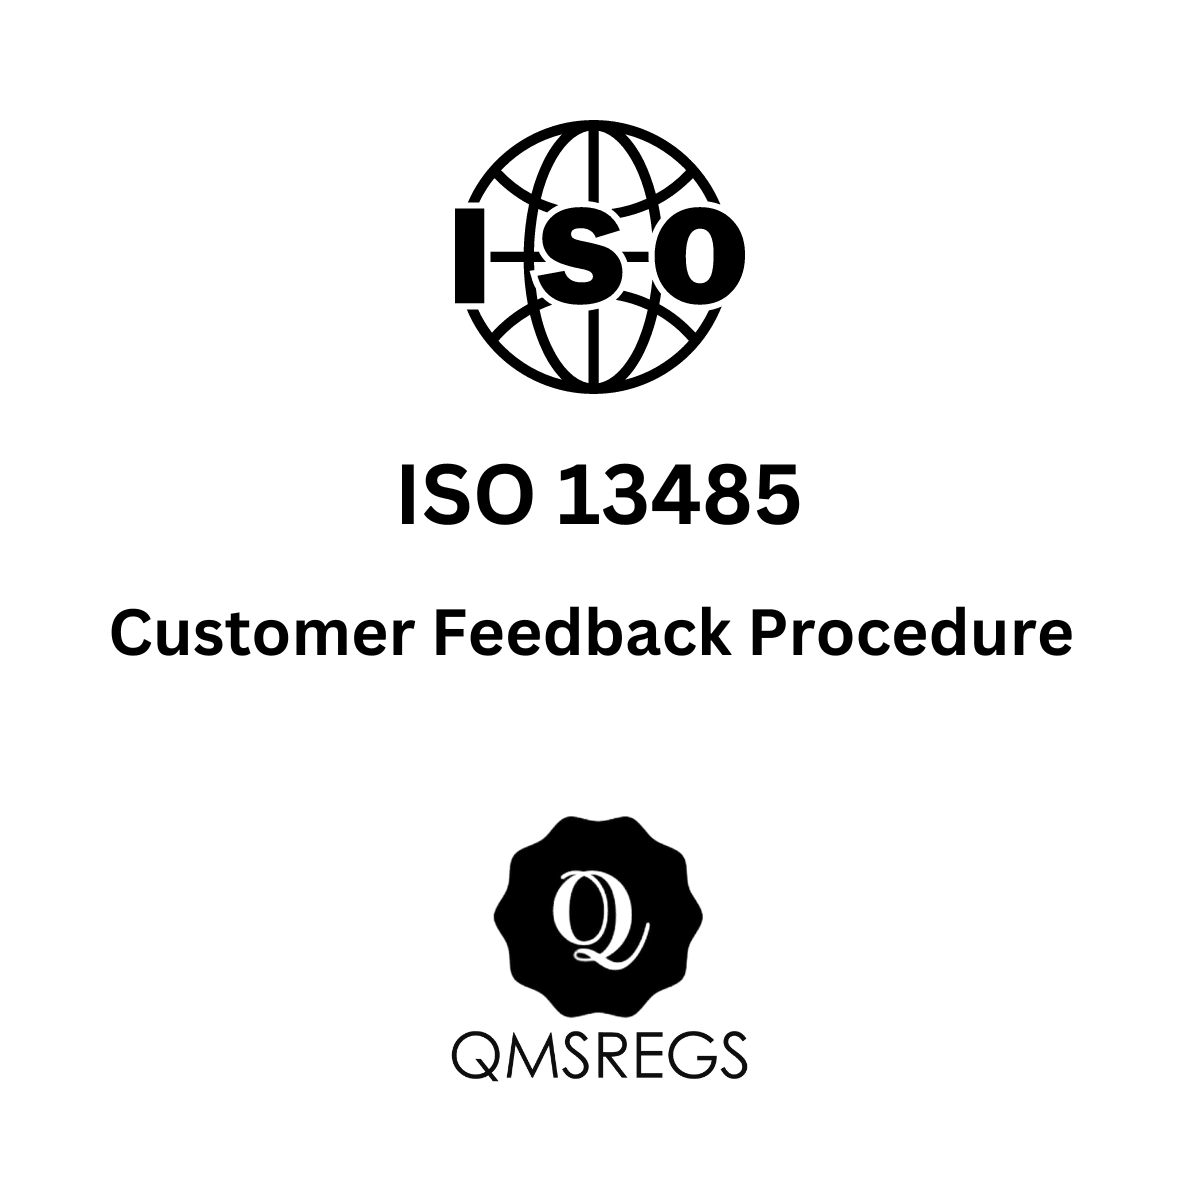 ISO 13485 customer feedback procedure template